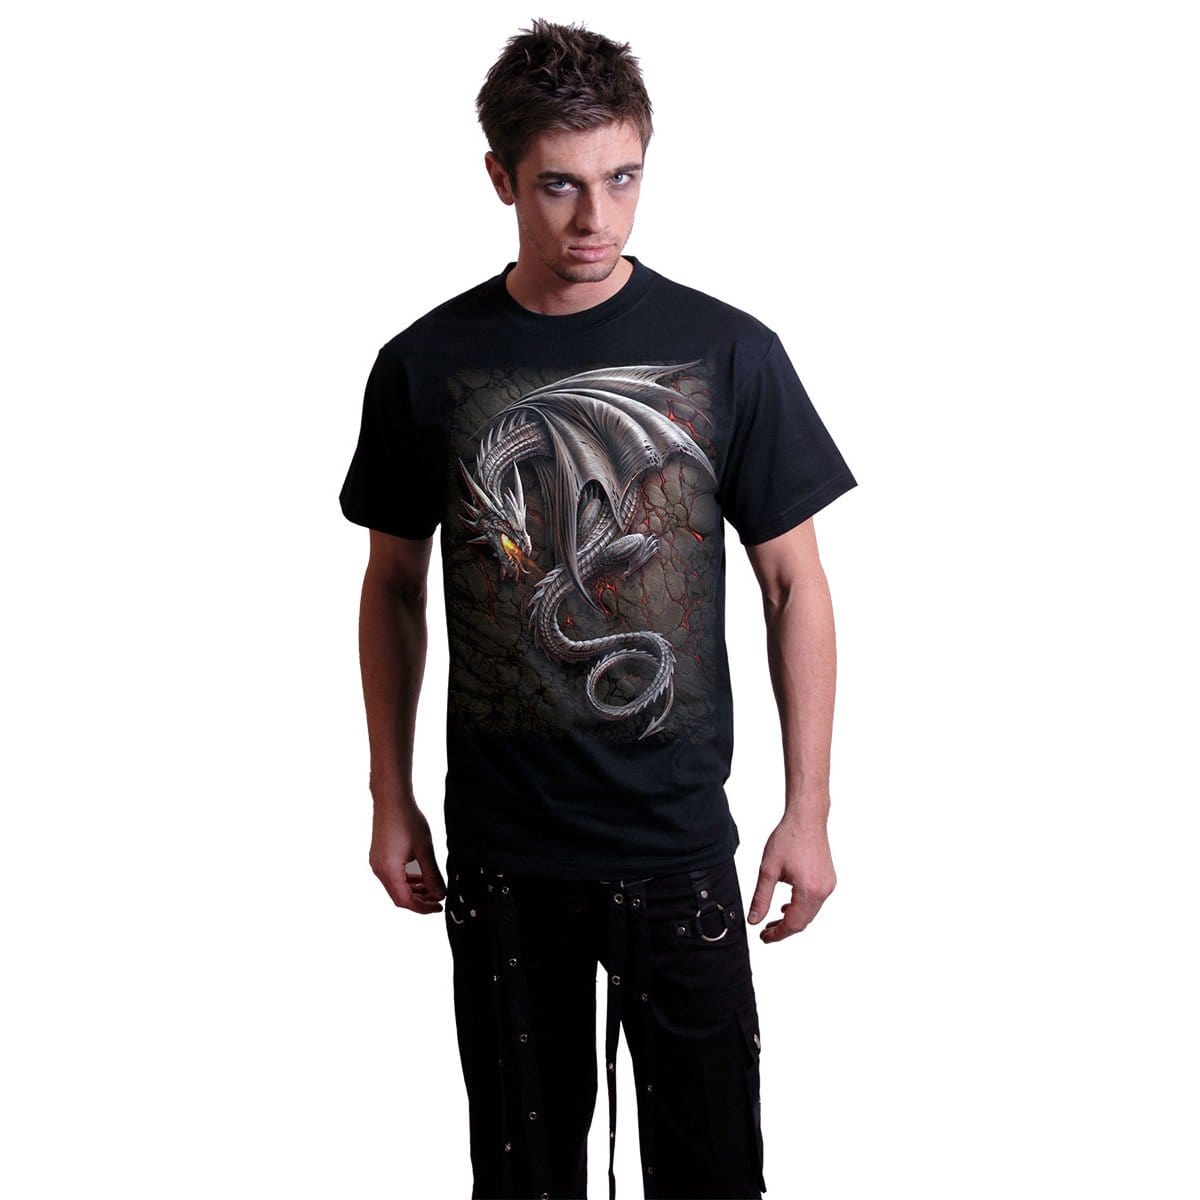 OBSIDIAN - T-Shirt Black - Spiral USA